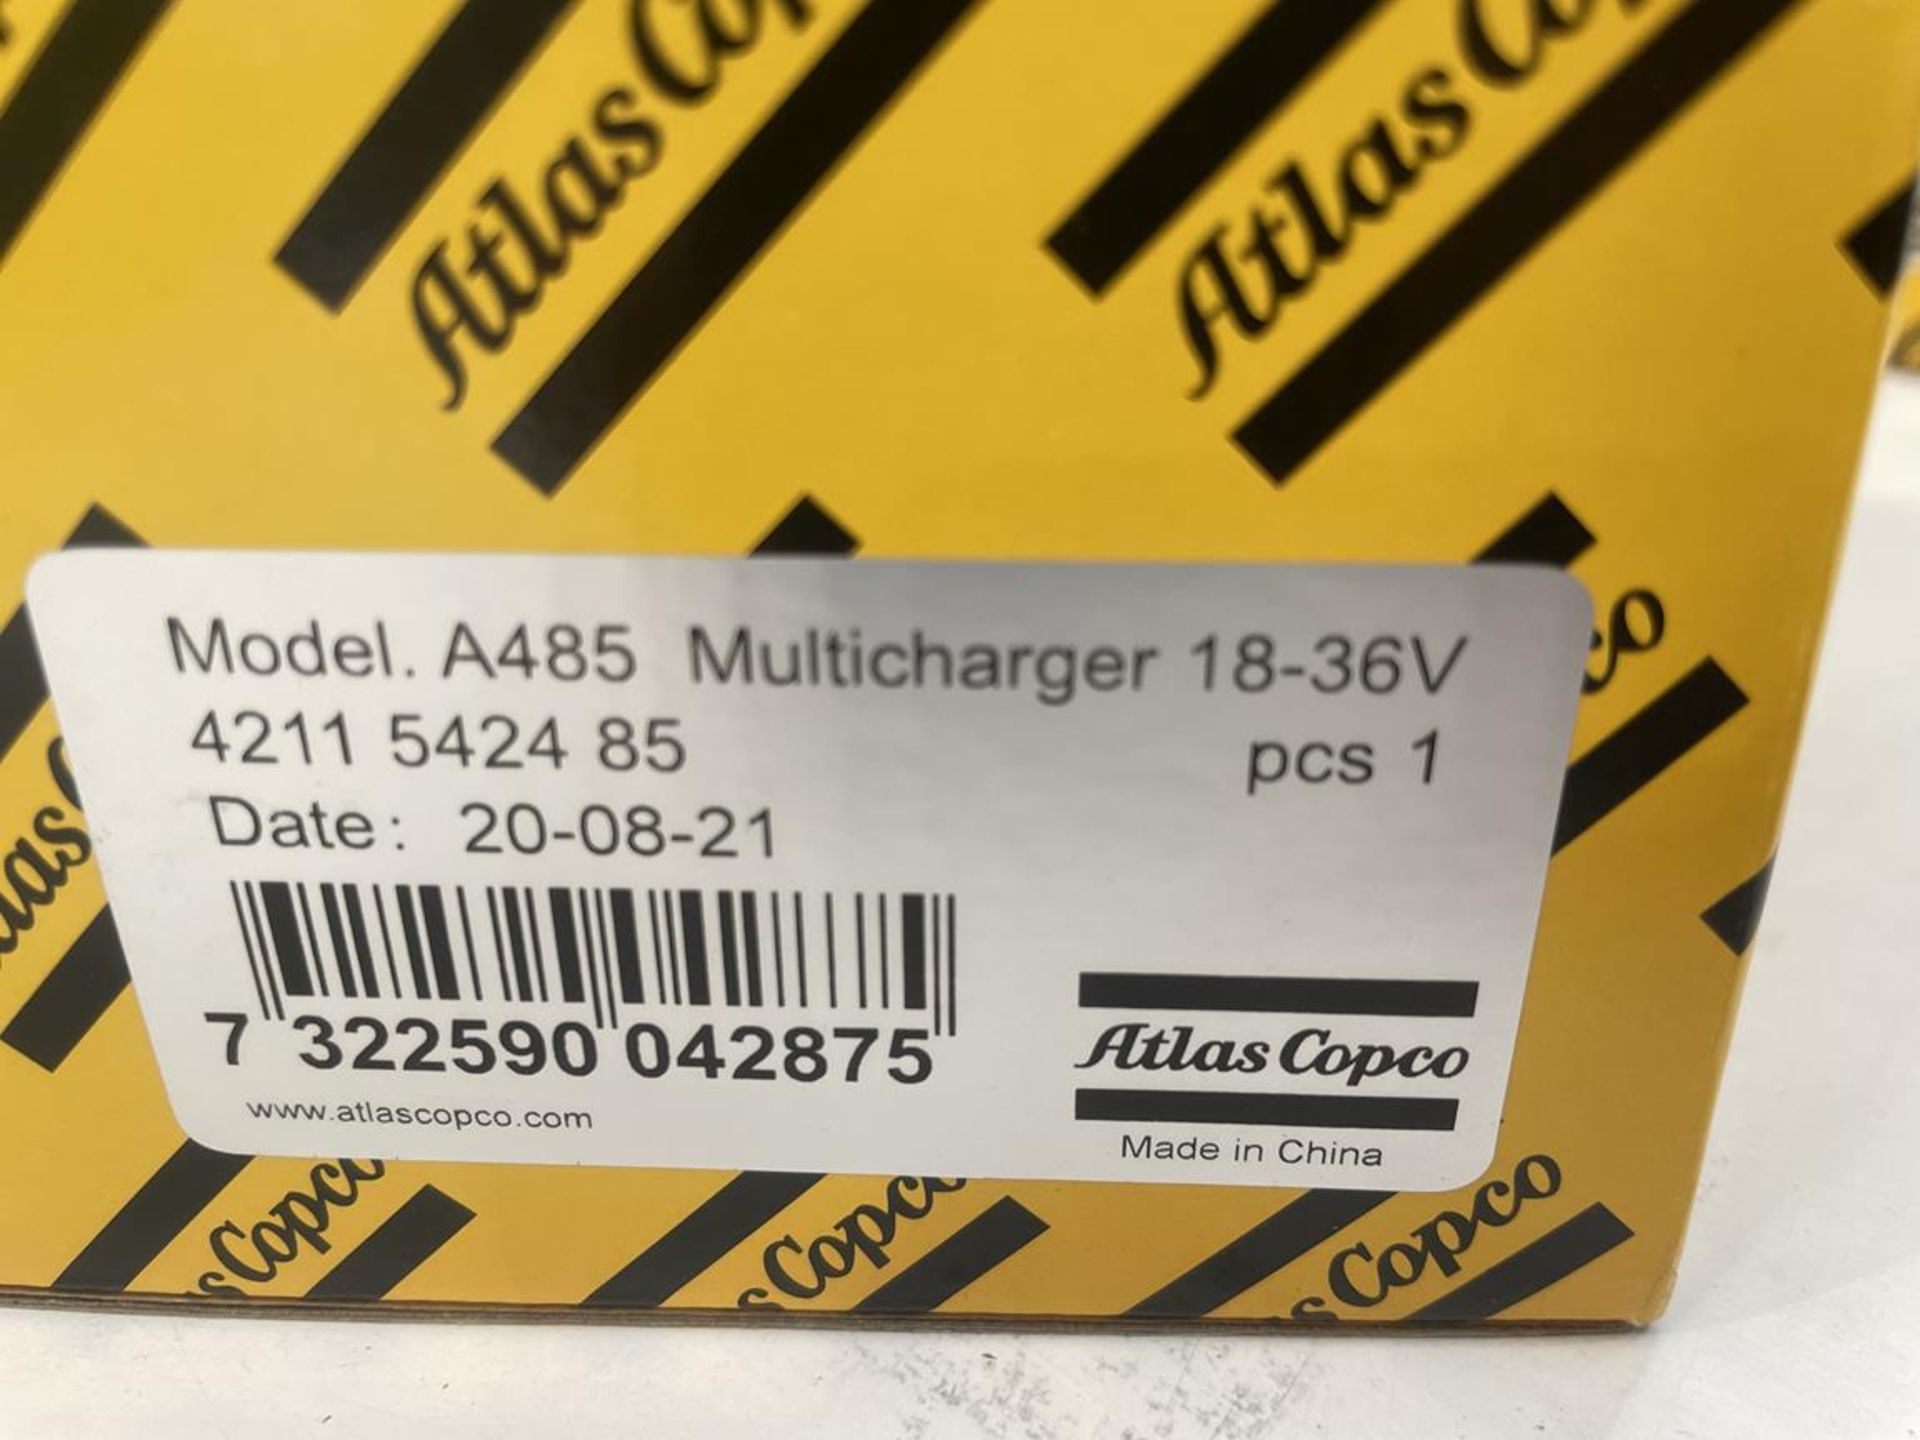 3x (no.) Atlas Copco, A485 multi-charger 4211 5424 85 - Bild 2 aus 2